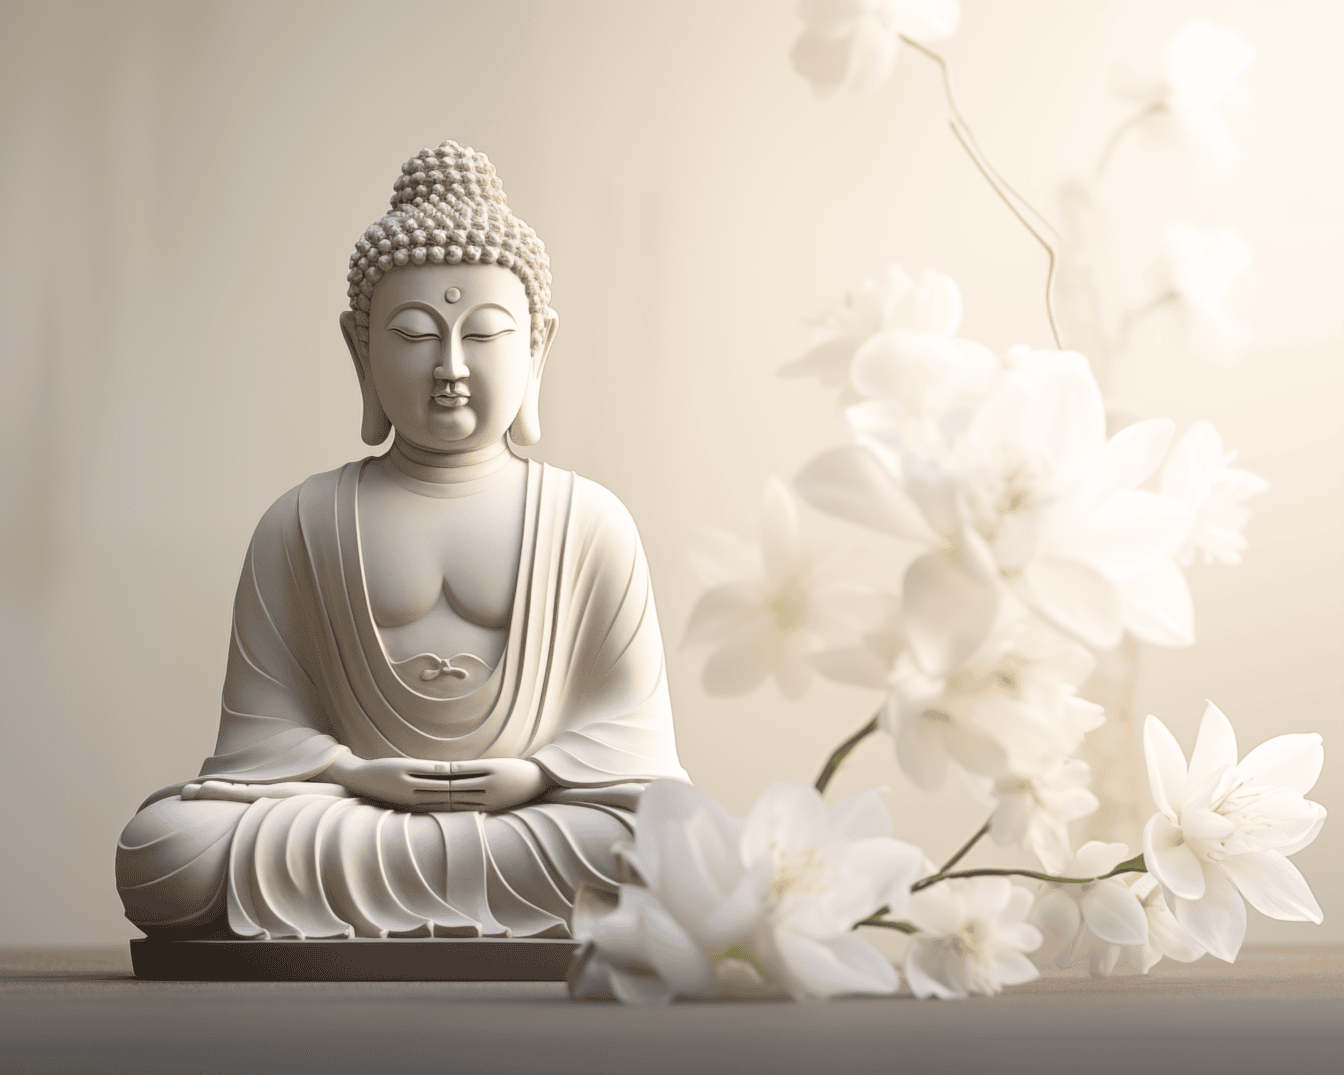 Patung Buddha dalam meditasi transendental yang mendalam sambil duduk dalam posisi lotus